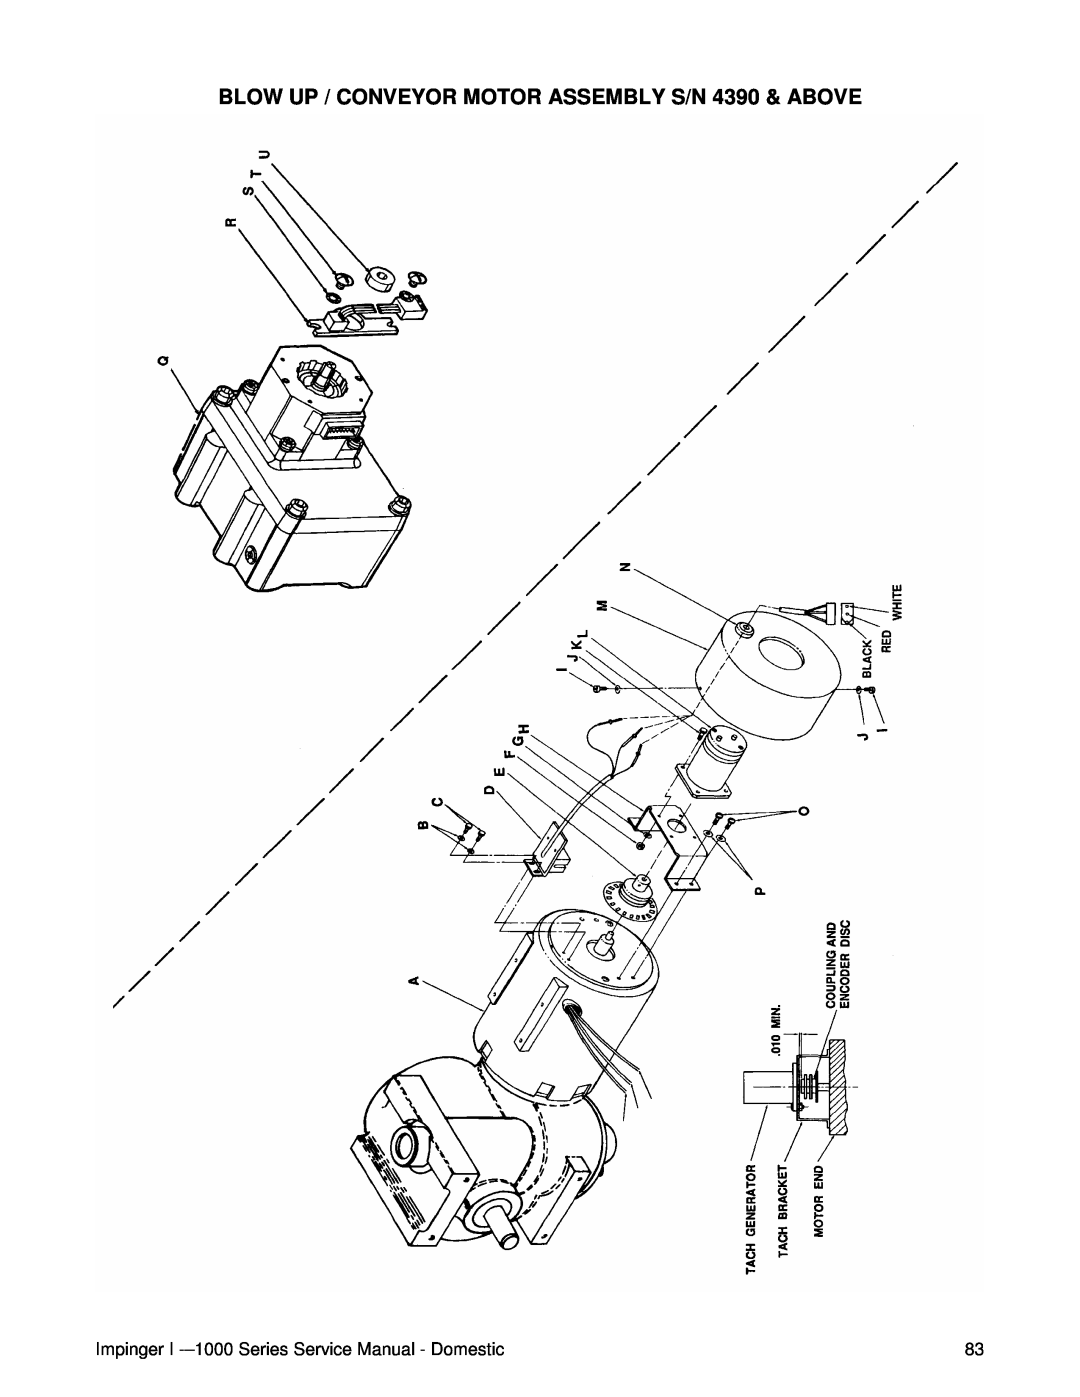 Lincoln 1400, 1200 service manual Impinger I -–1000Series Service Manual - Domestic 